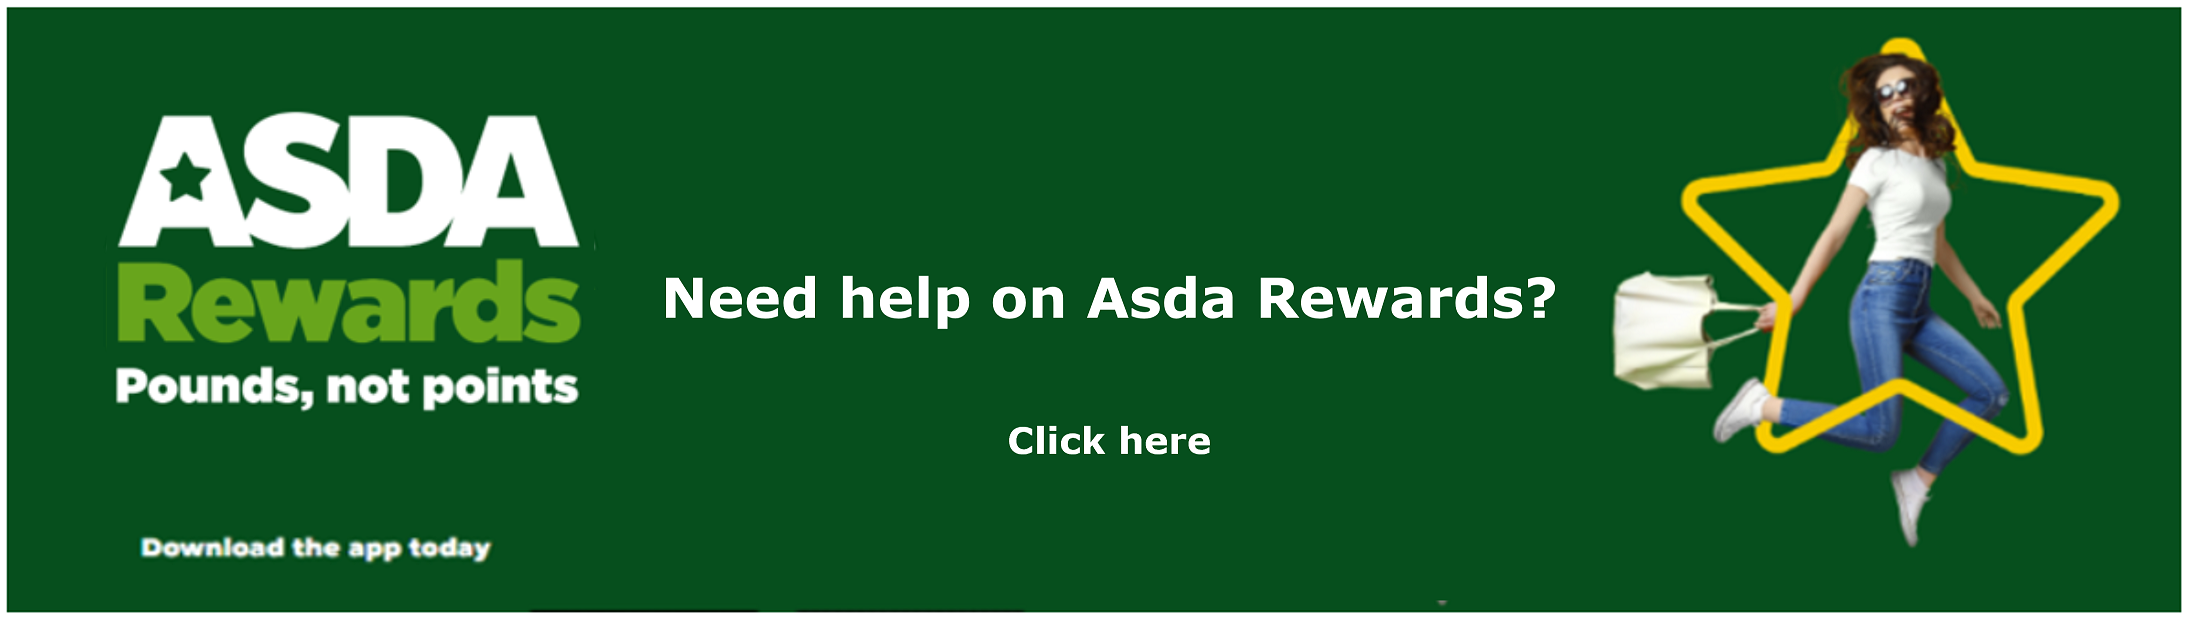 asda travel money contact number